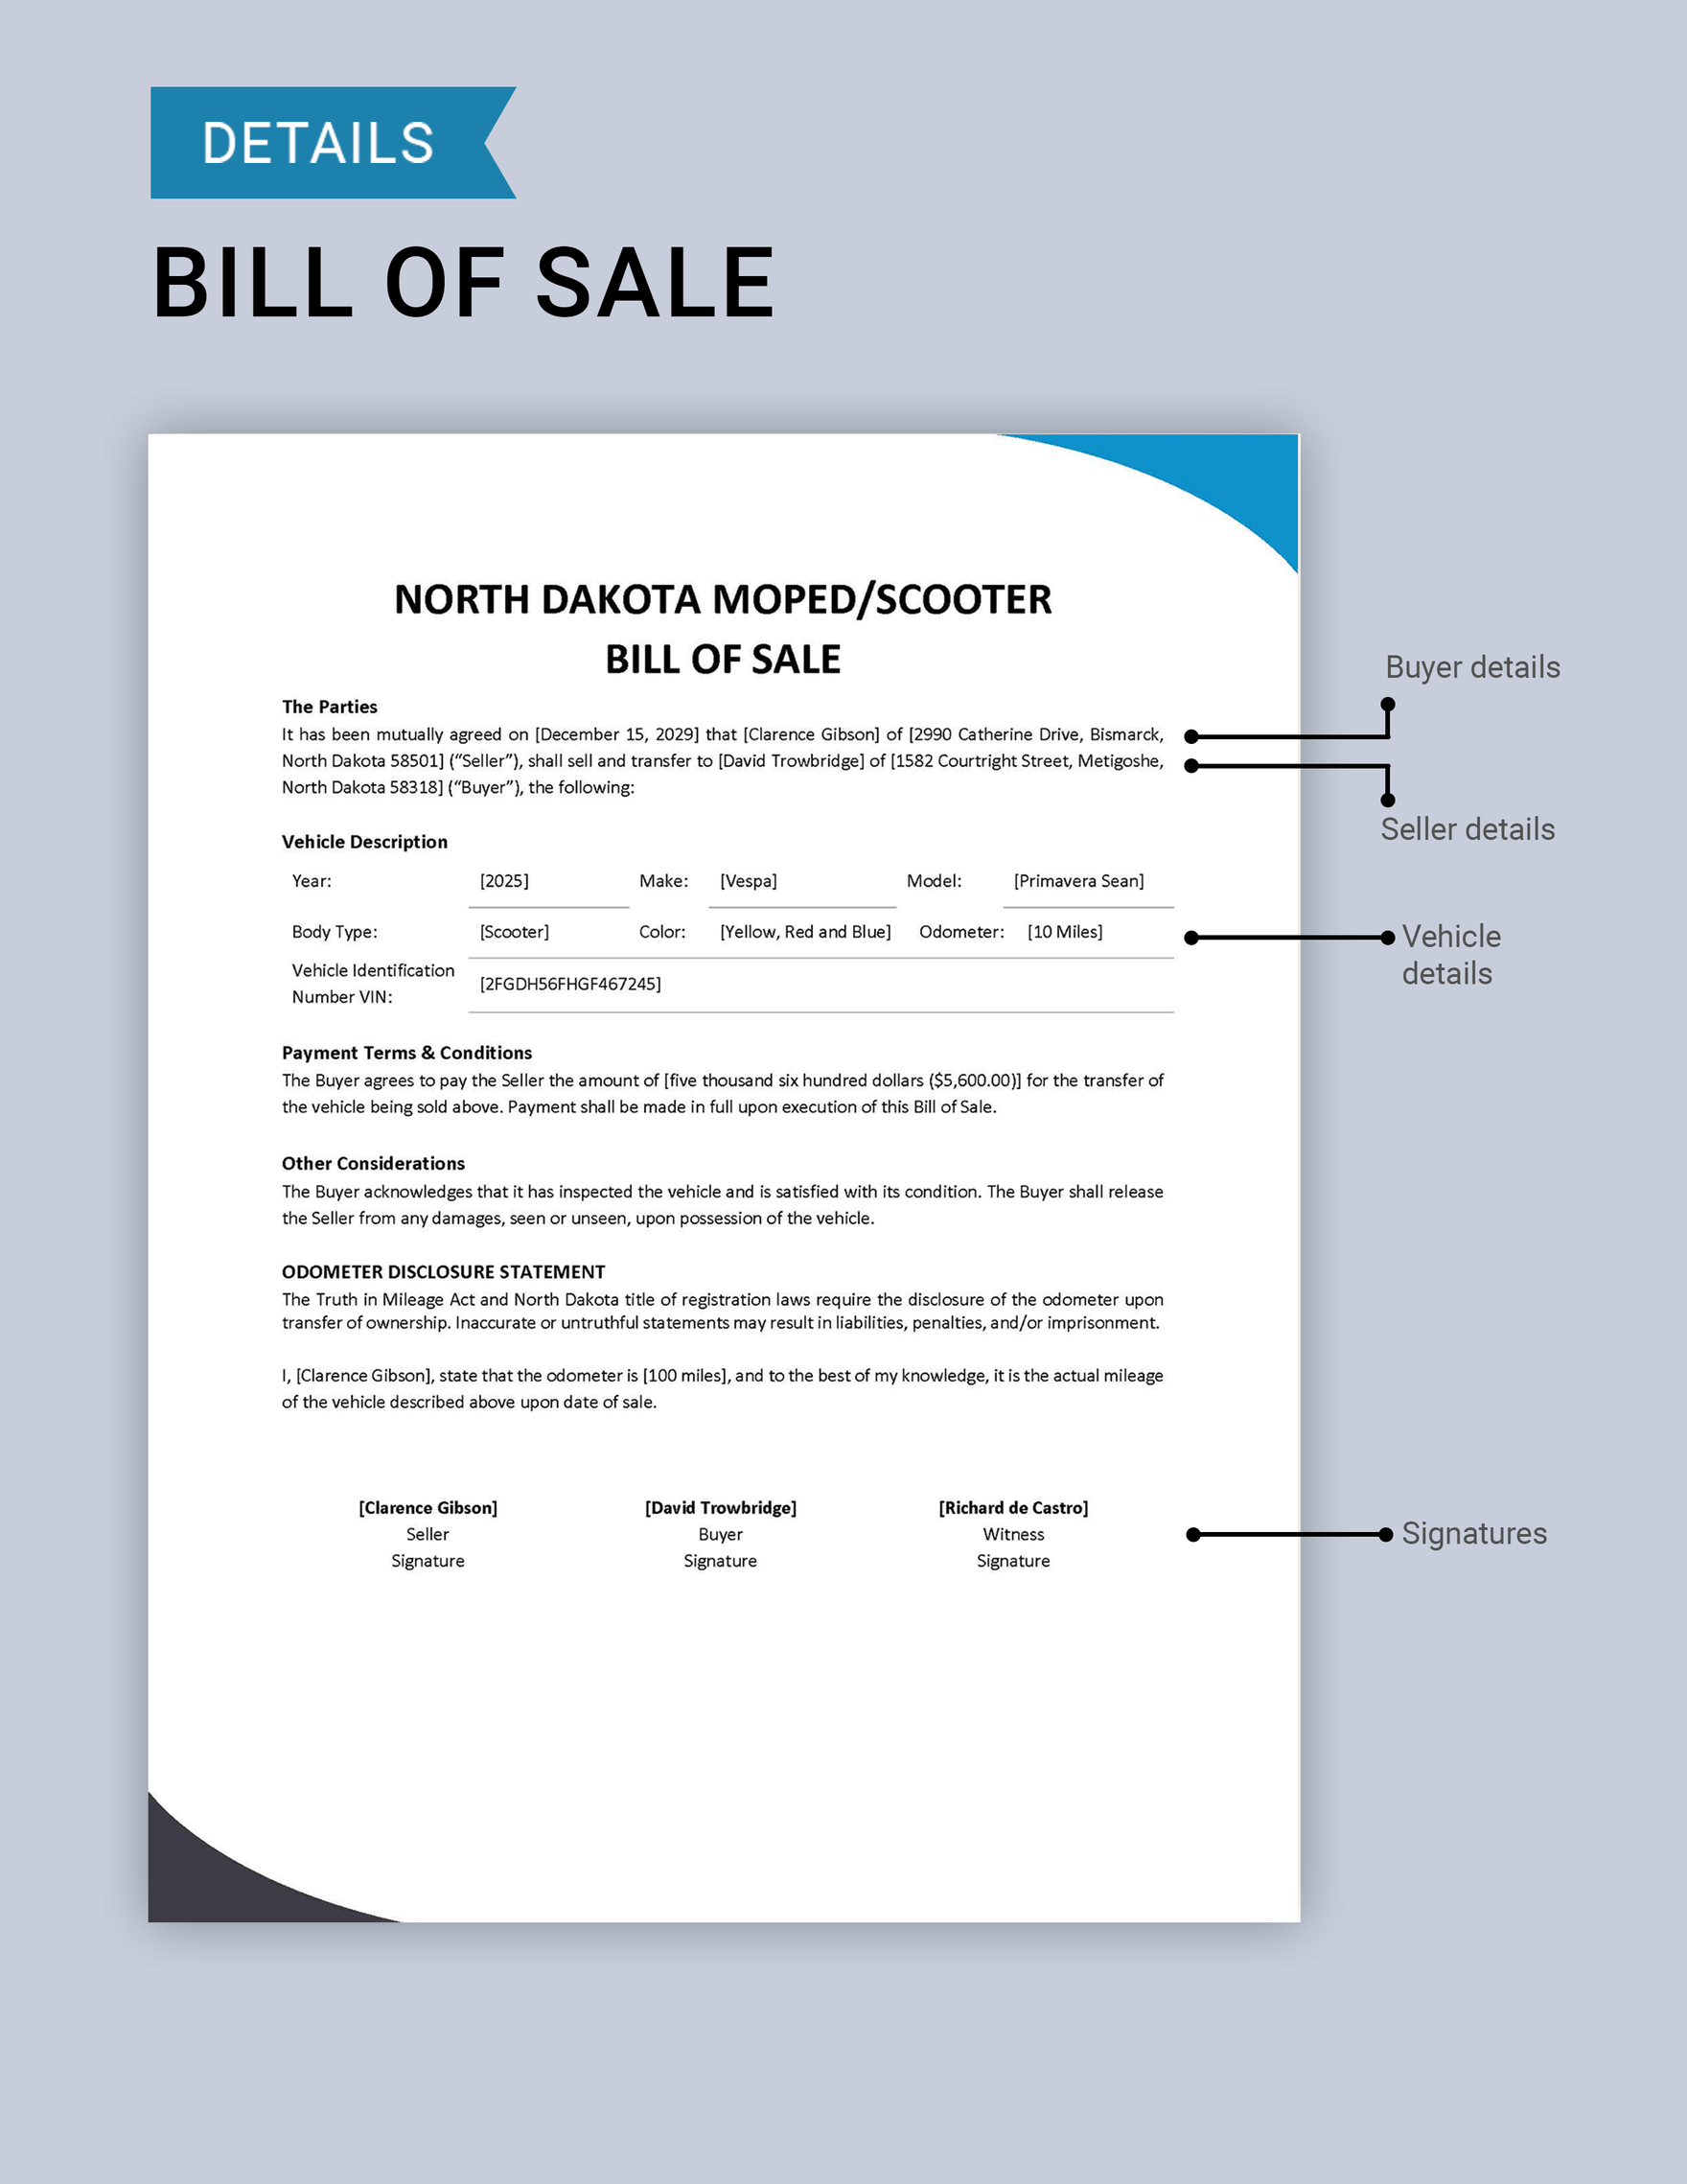 North Dakota Moped / Scooter Bill of Sale Template